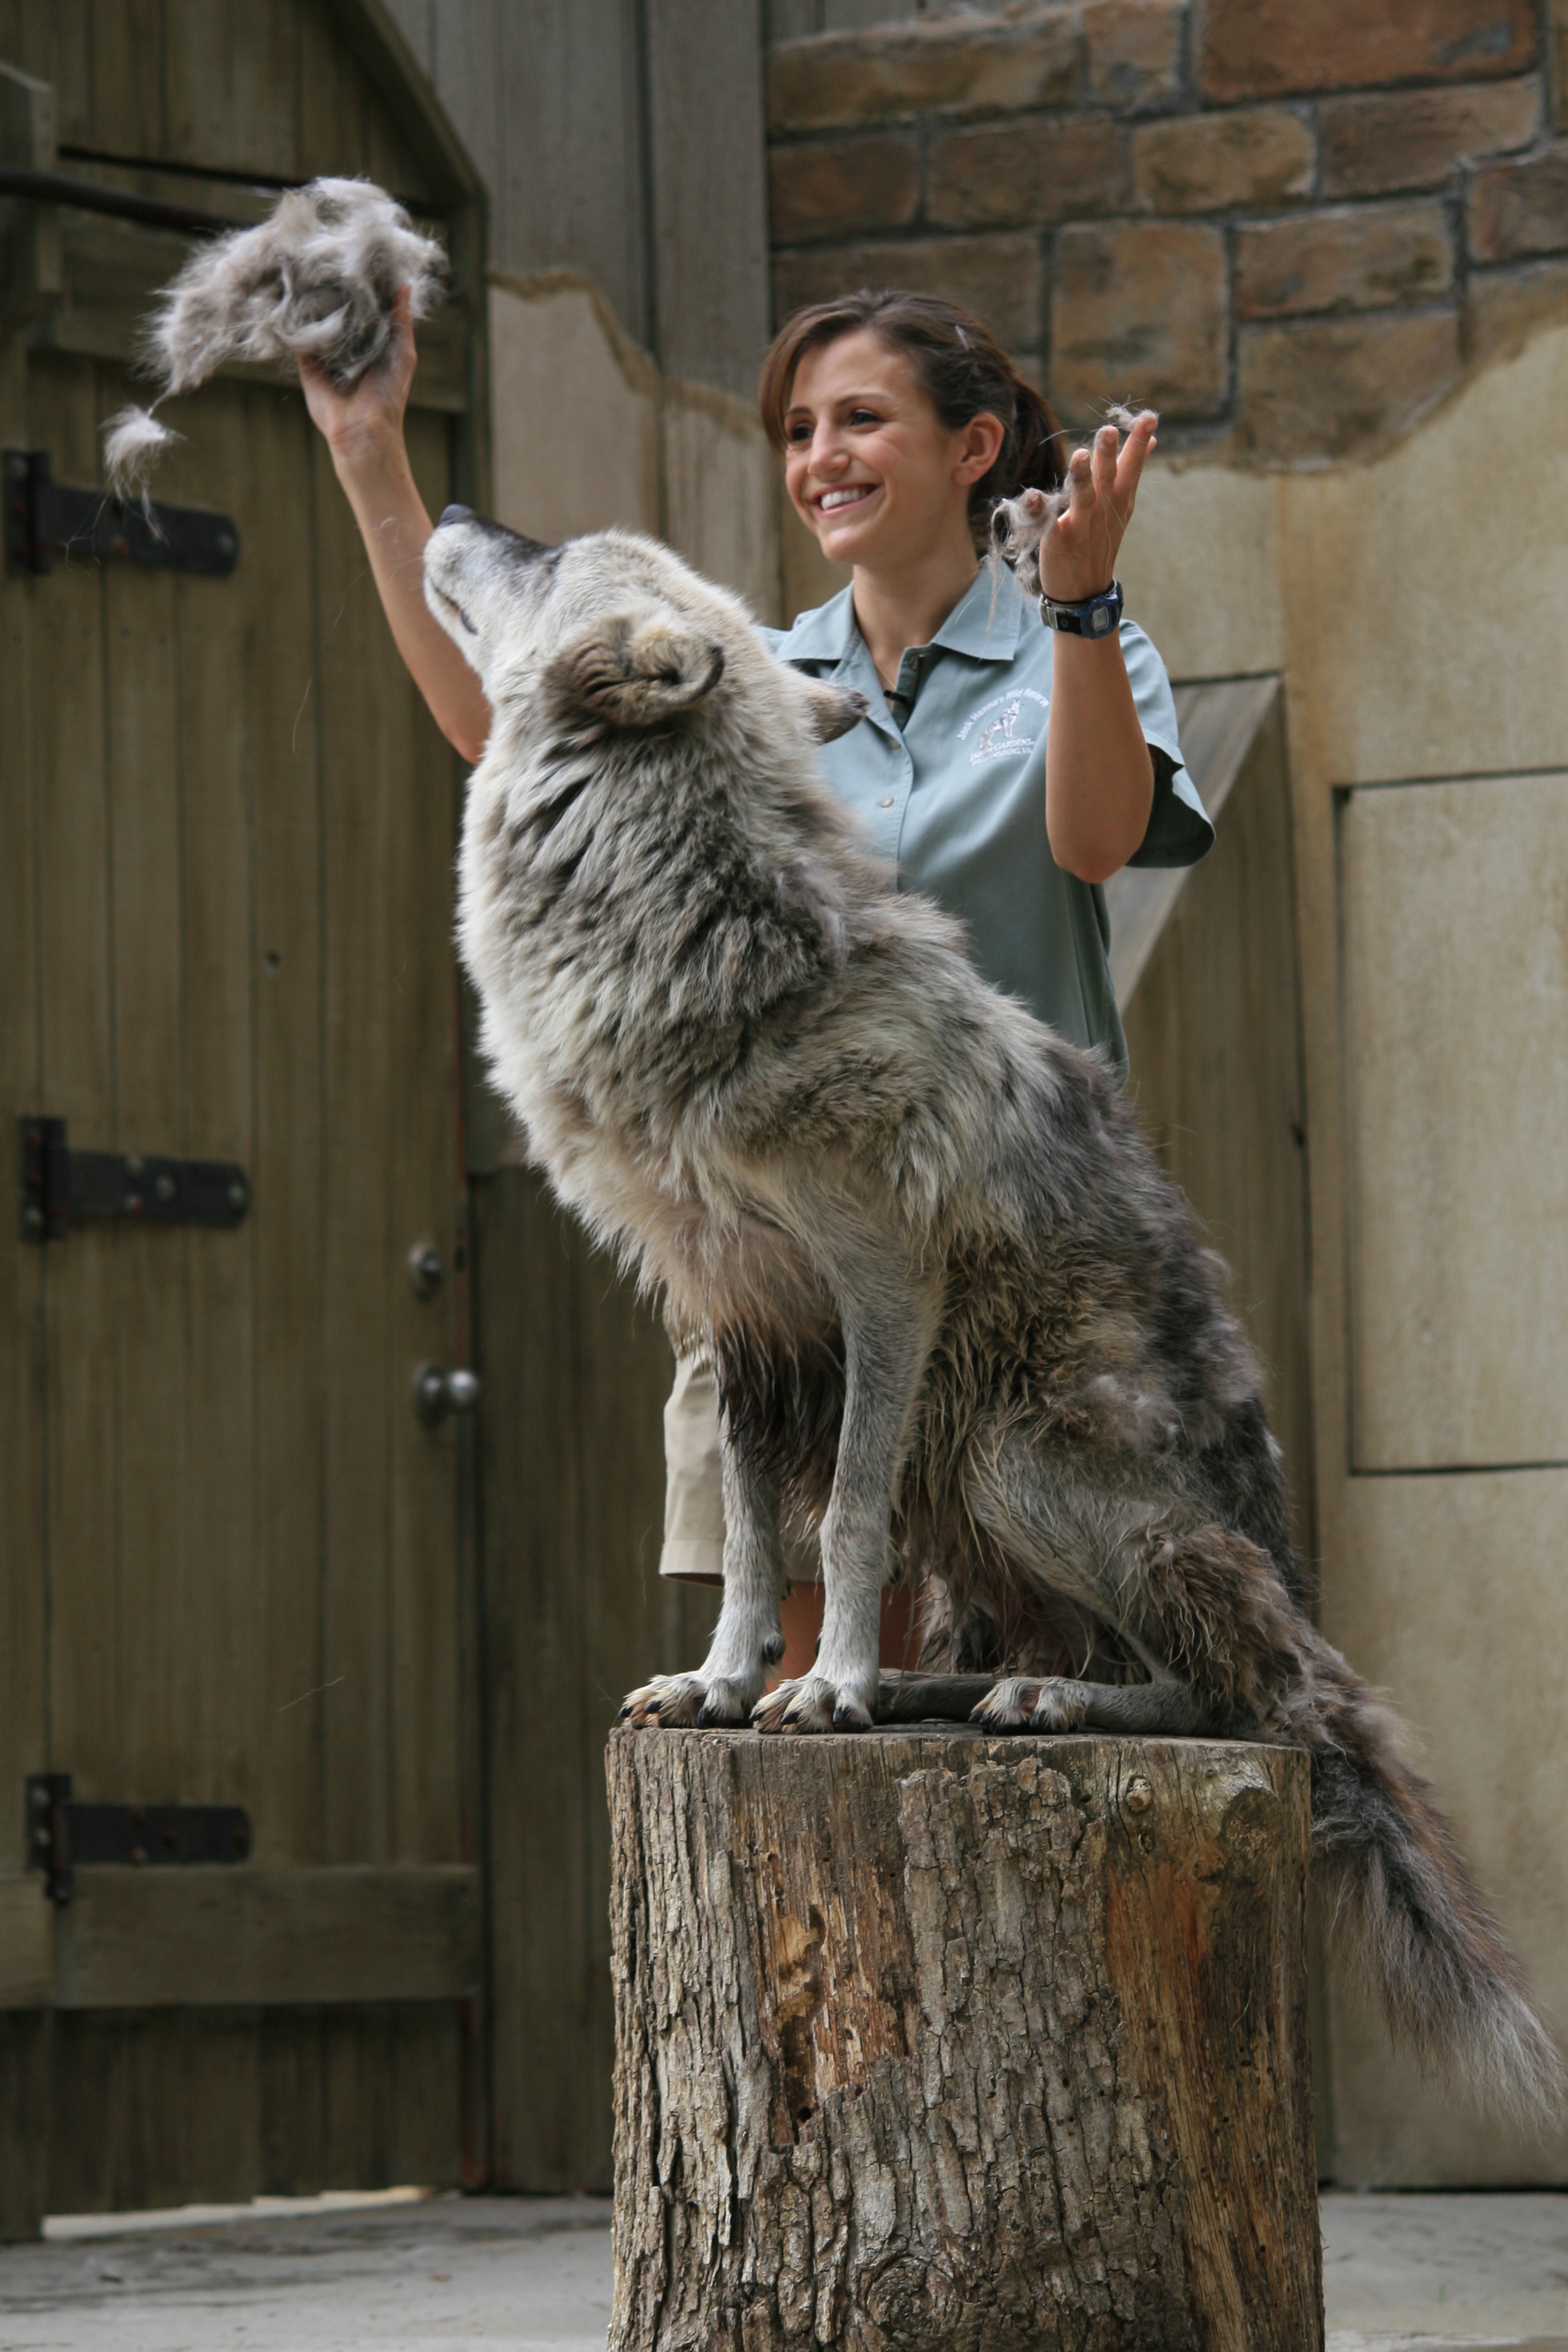 Let the Fur Begin | Busch Gardens Blog